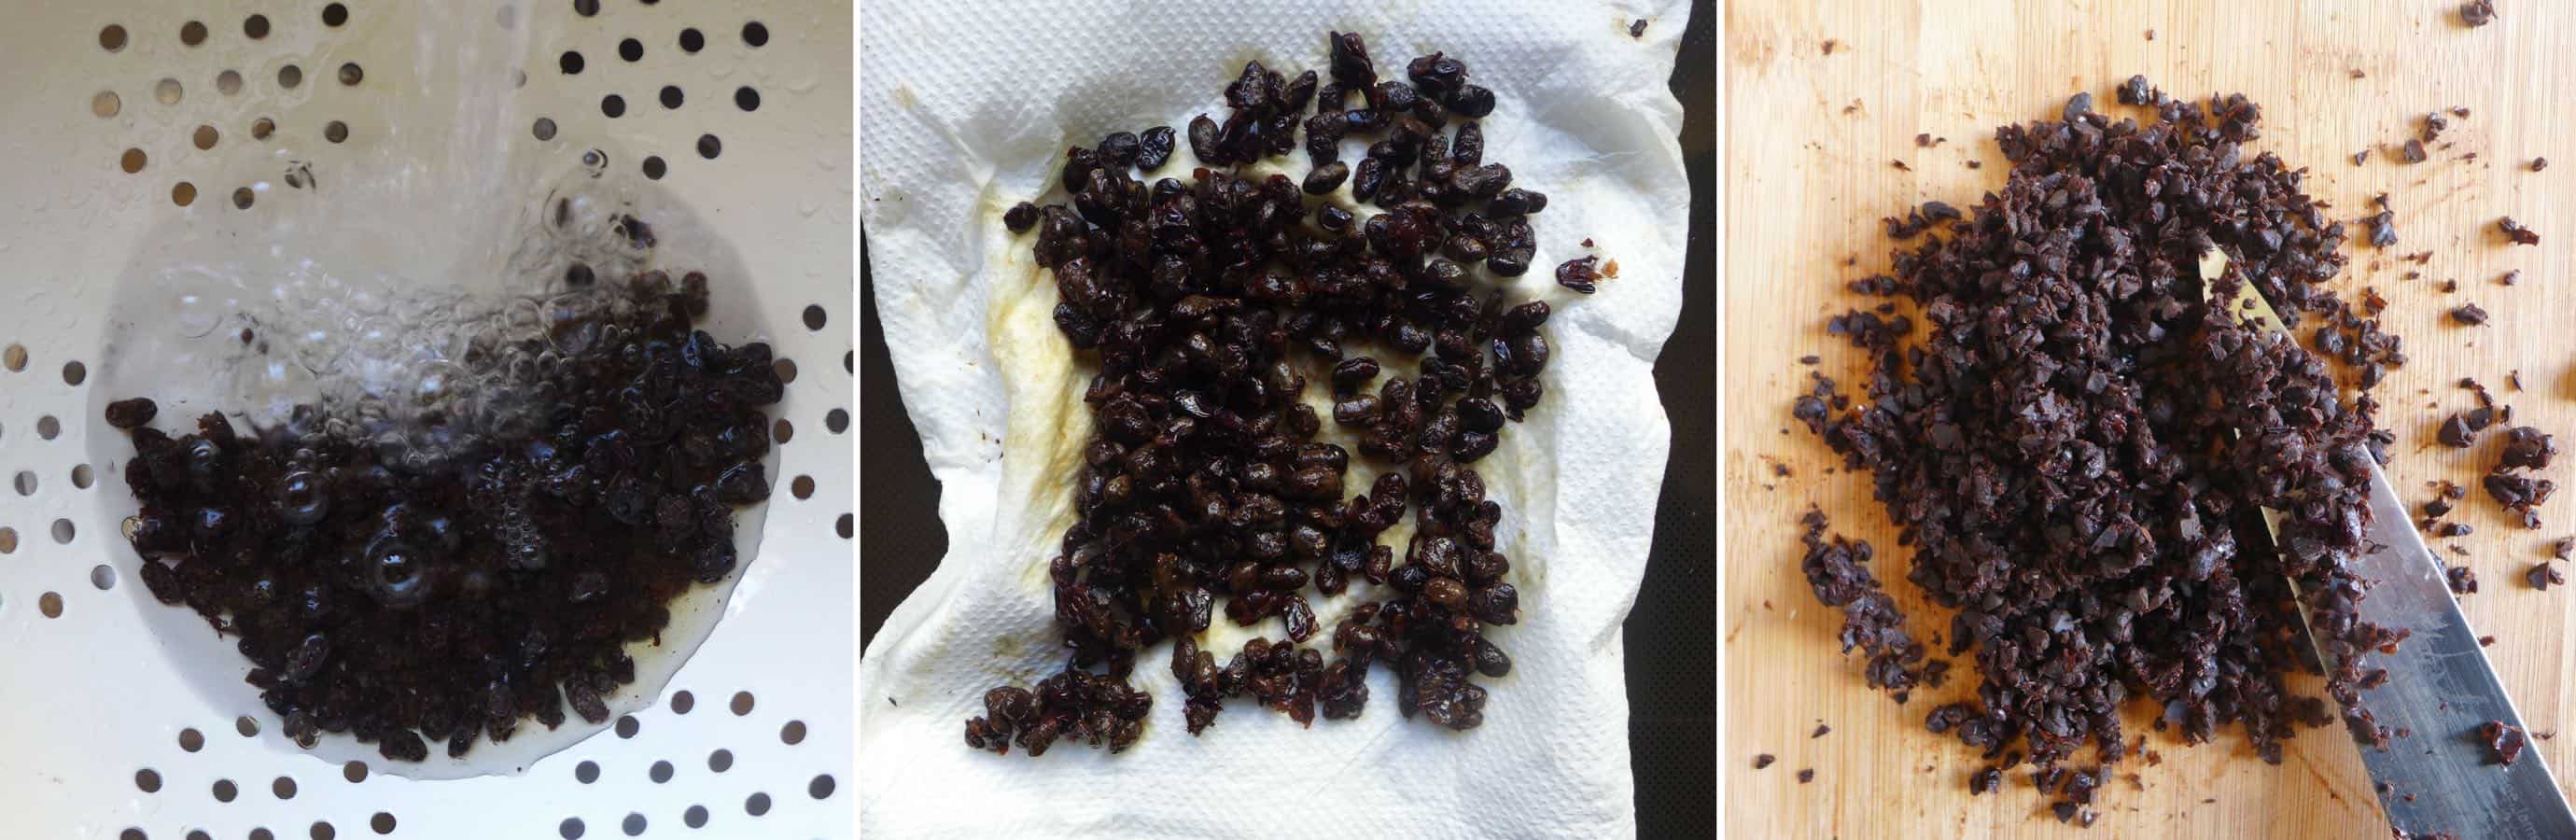 Fermented black beans